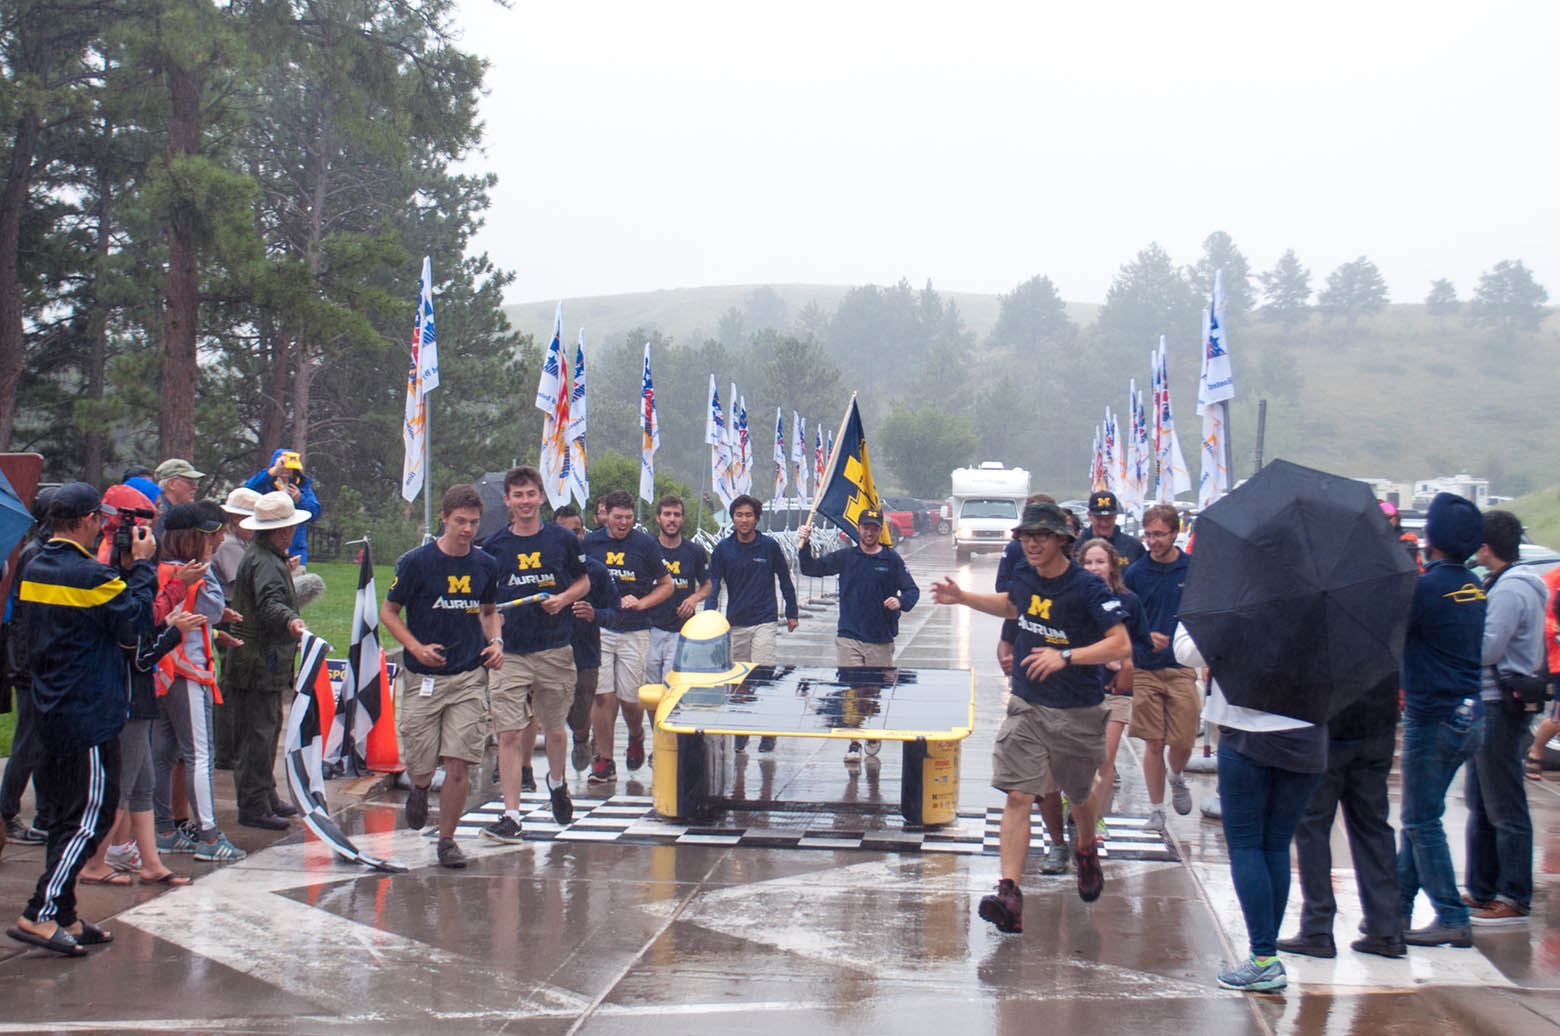 Members of the Michigan Solar Car team run across a finish line alongside their car, Aurum, in the rain.